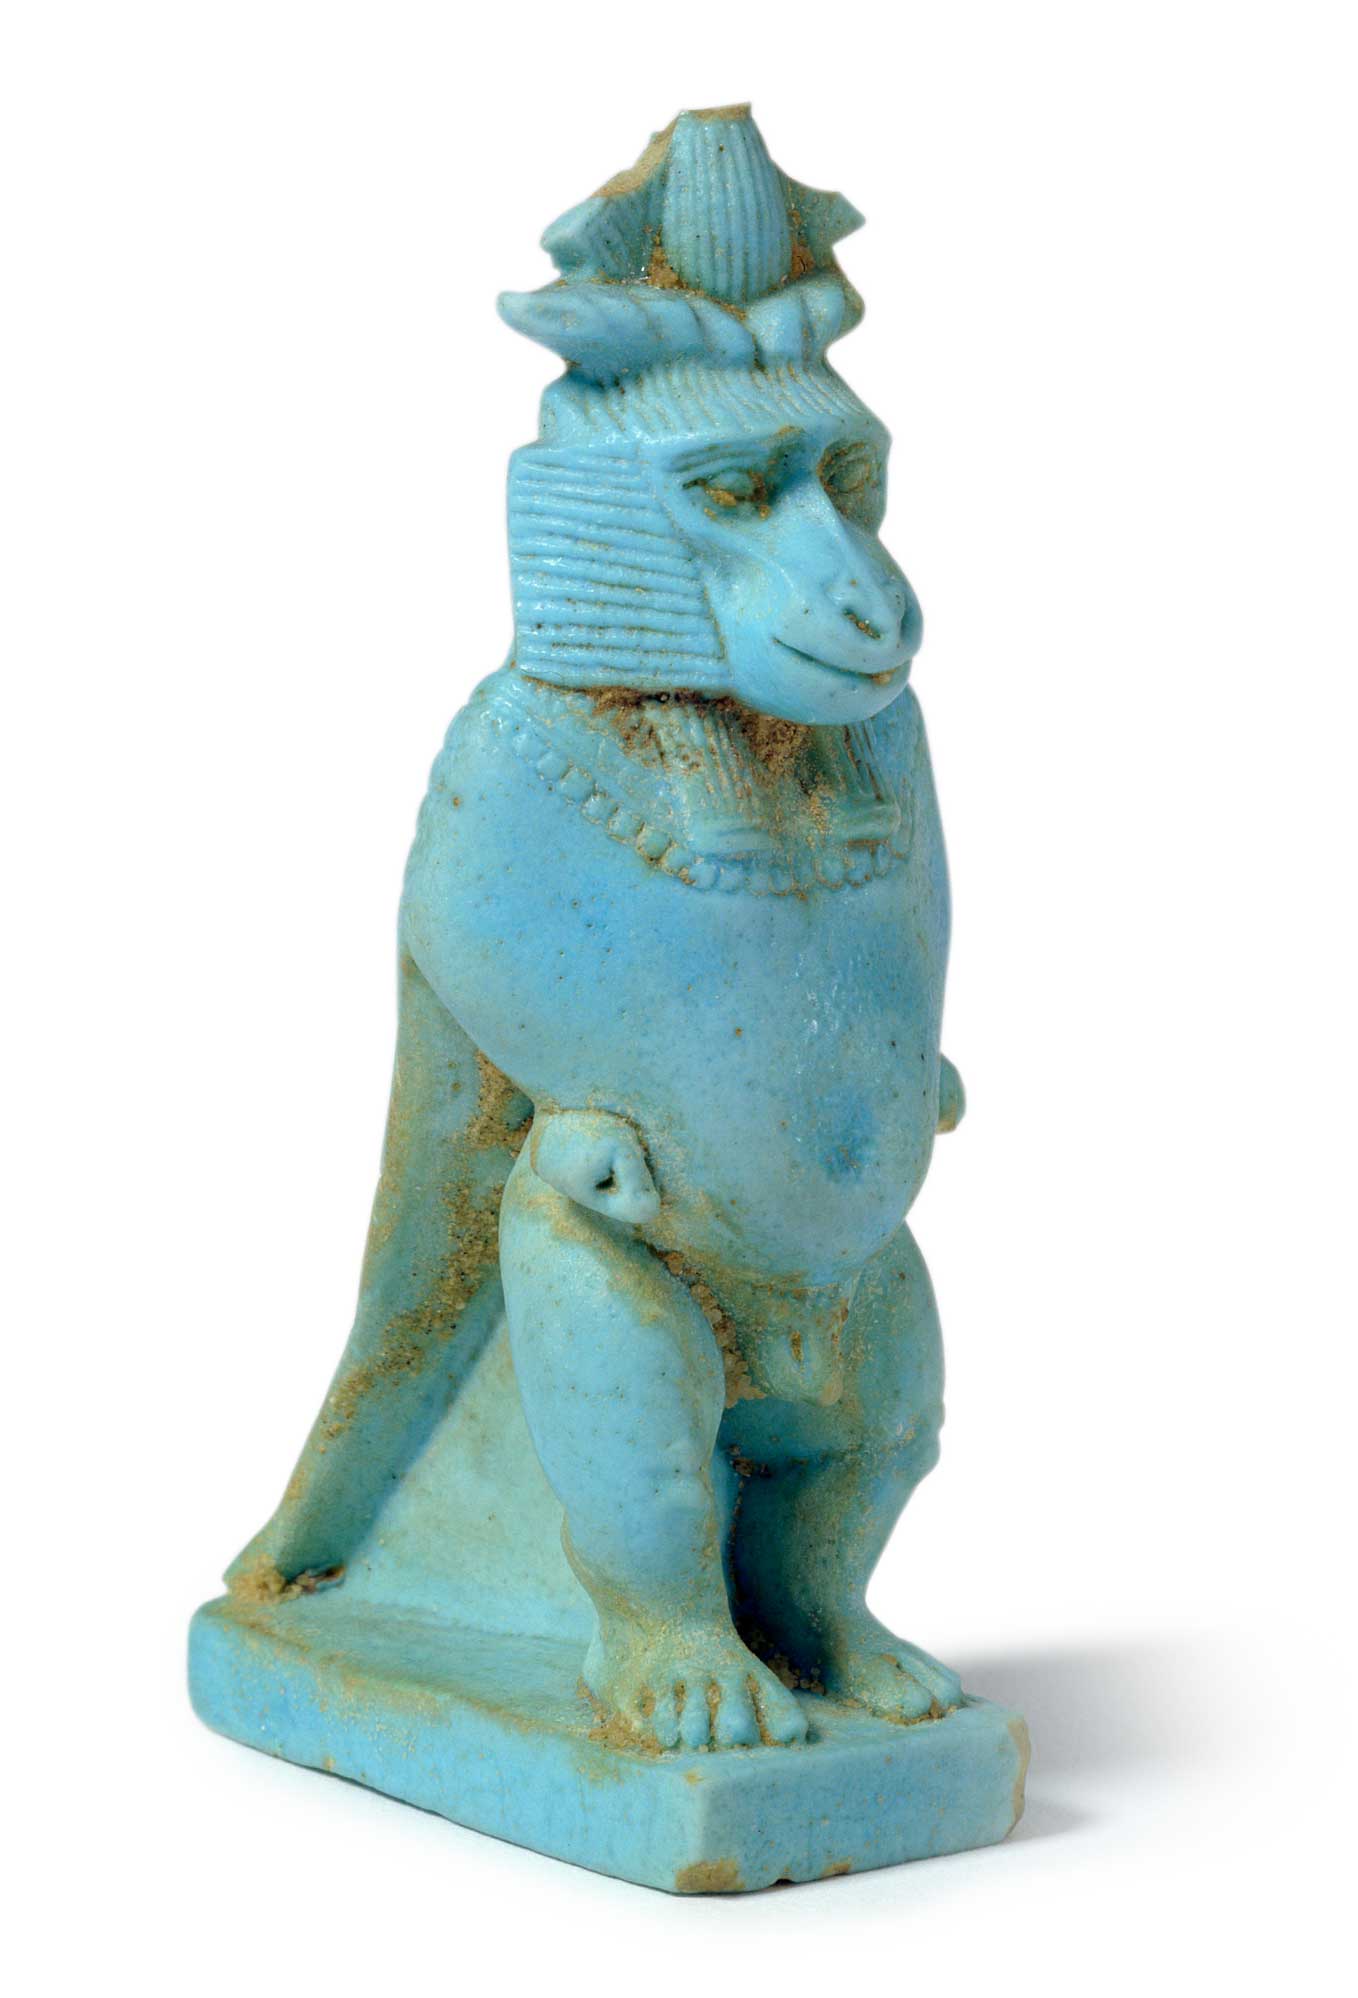 Egyptian monkey statue, c. first century AD. Courtesy The Metropolitan Museum of Art